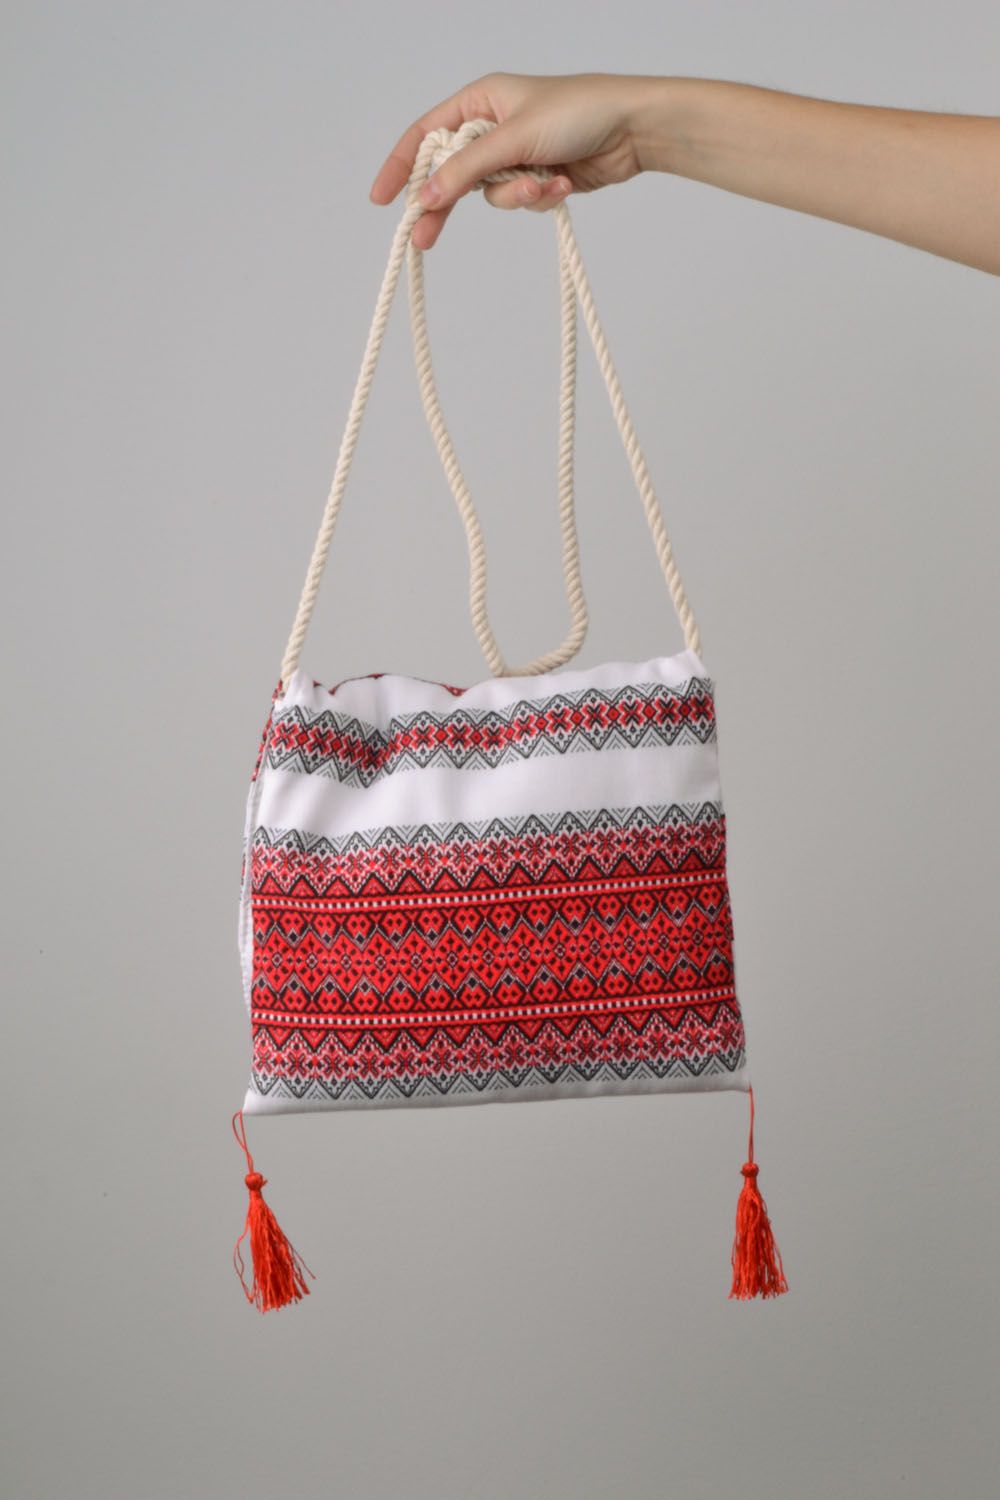 Shoulder bag in ethnic style photo 4